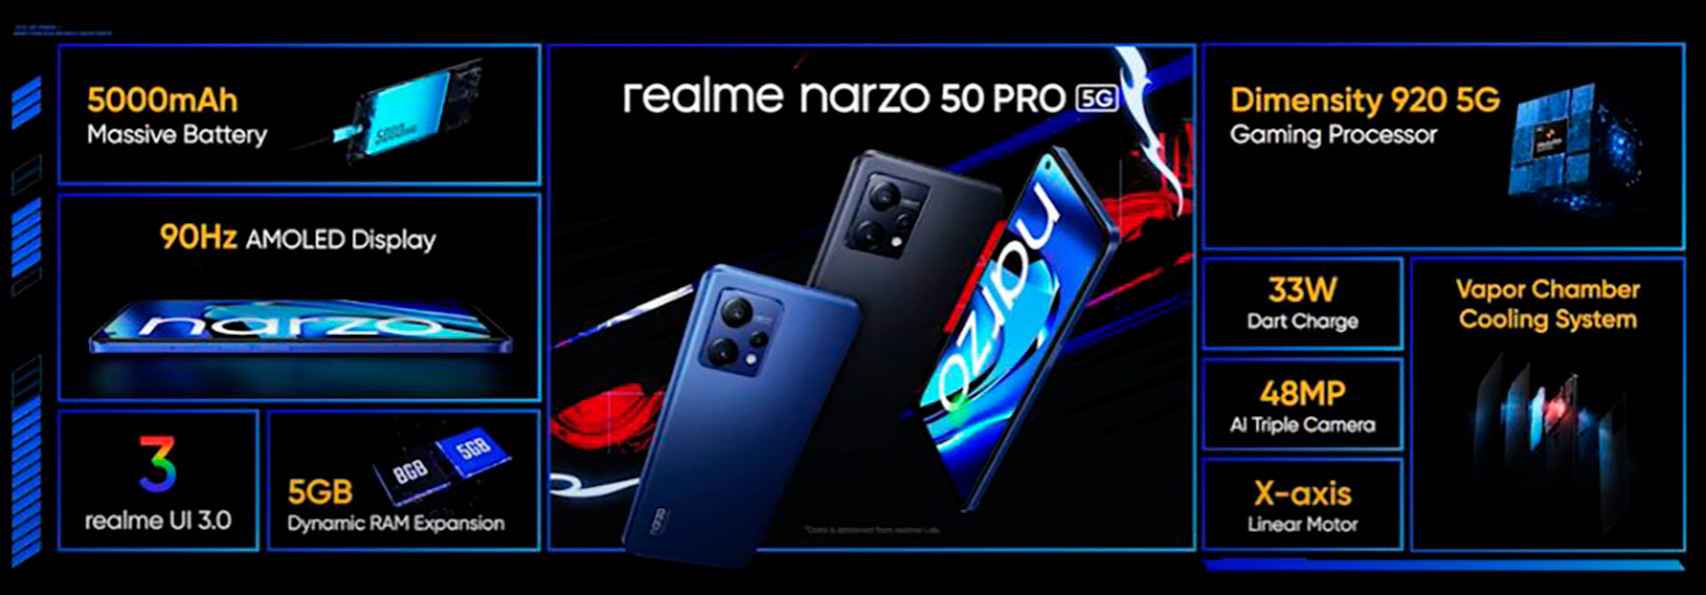 Especificaciones del realme Narzo 50 Pro 5G